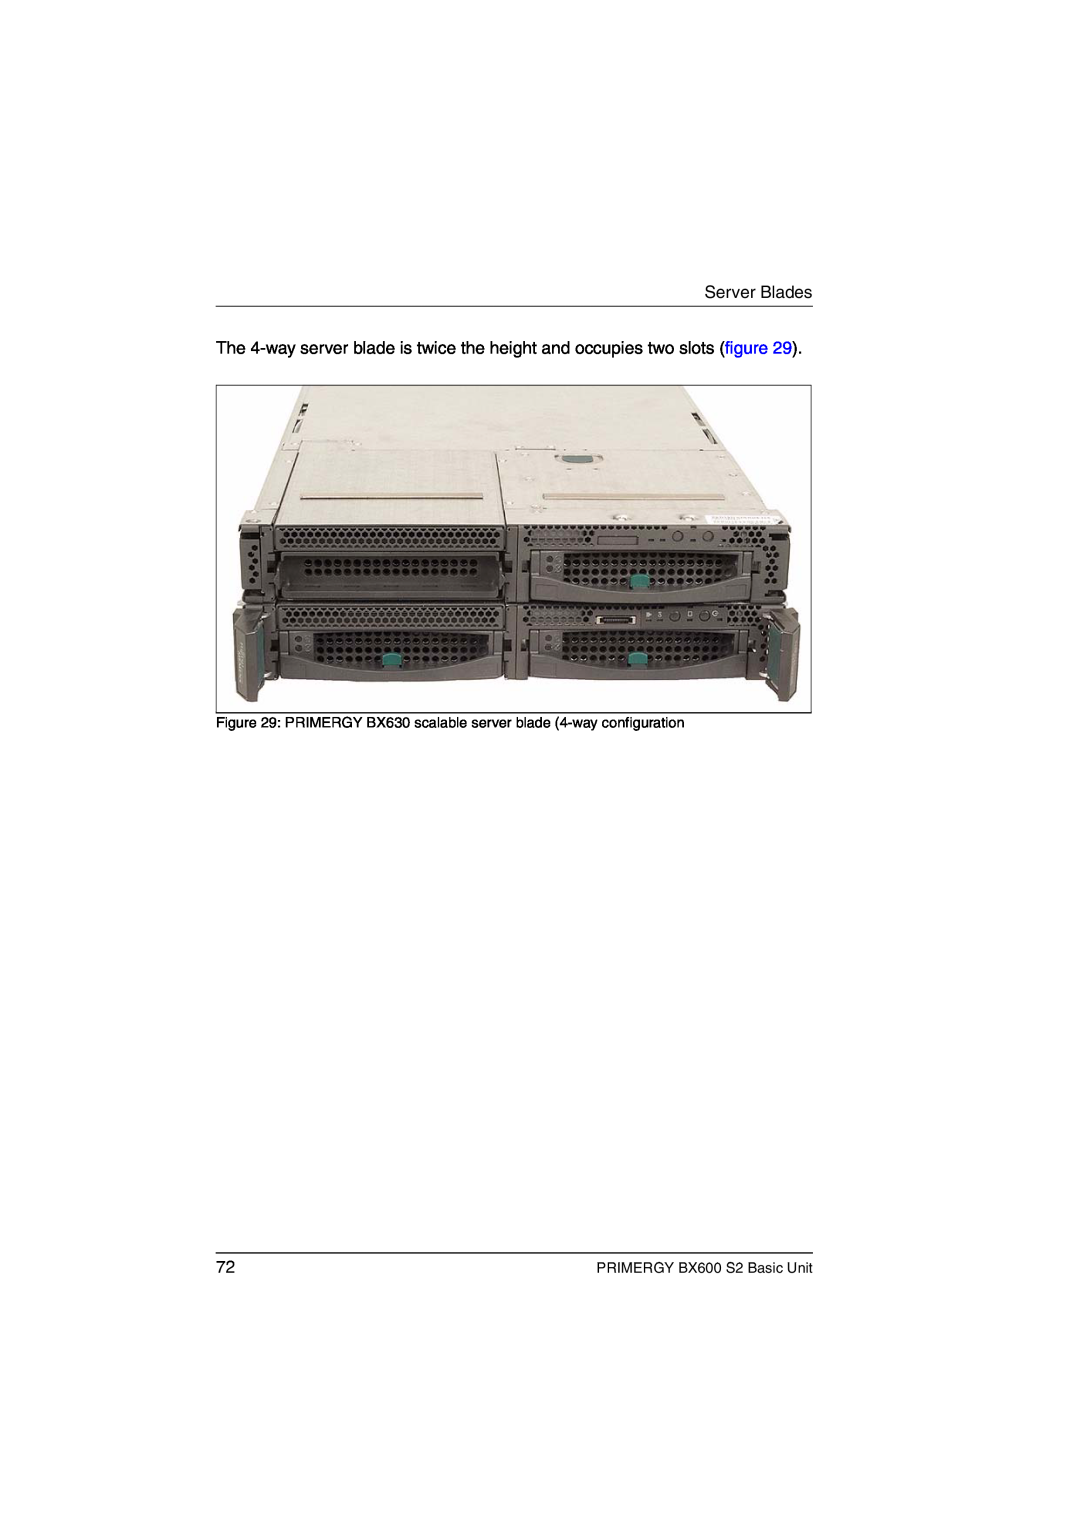 Fujitsu manual Server Blades, PRIMERGY BX630 scalable server blade 4-way configuration, PRIMERGY BX600 S2 Basic Unit 